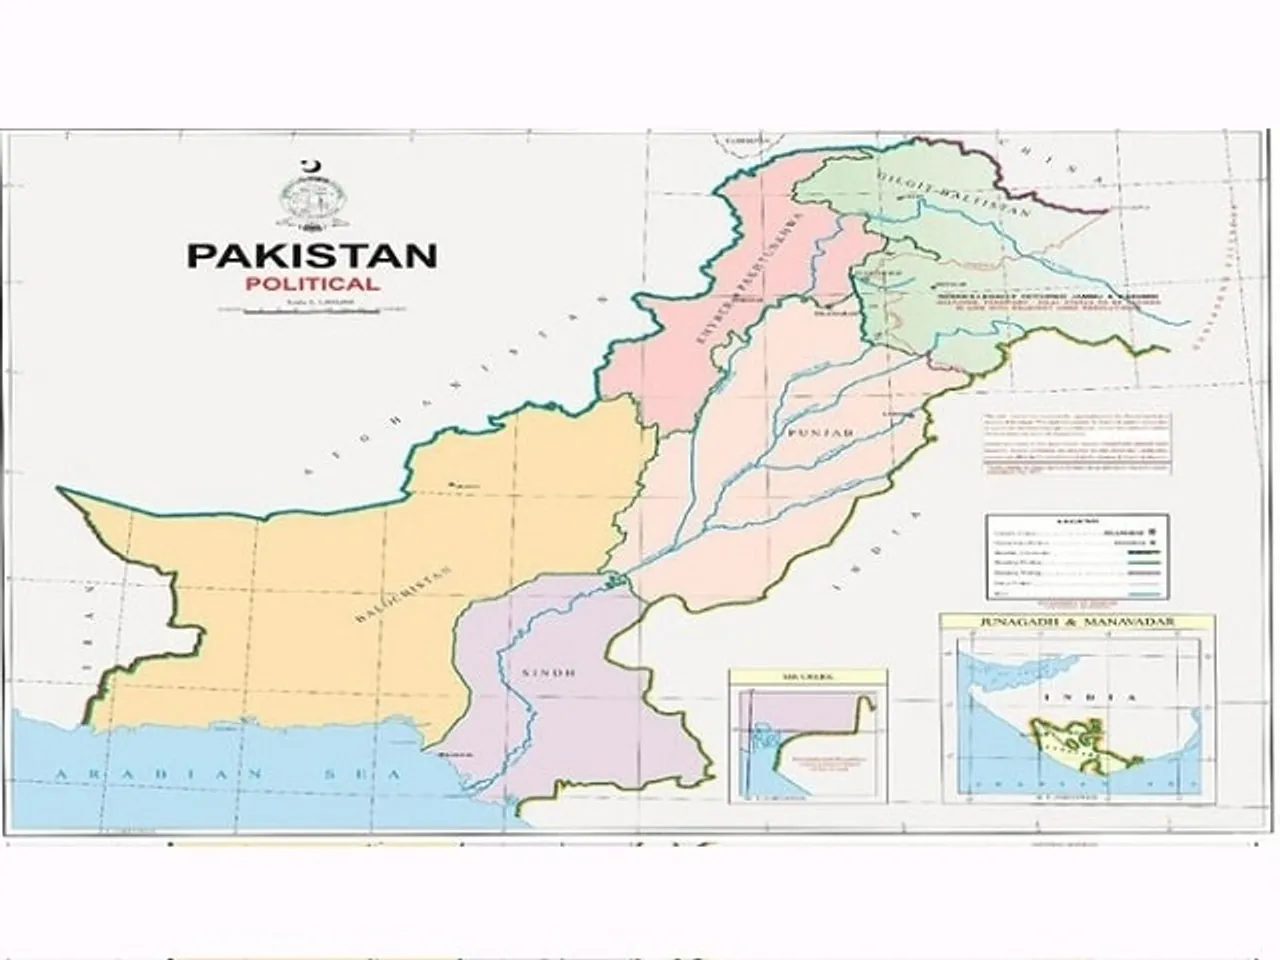 Jammu & Kashmir and Junagarh district in Pakistan's new political map